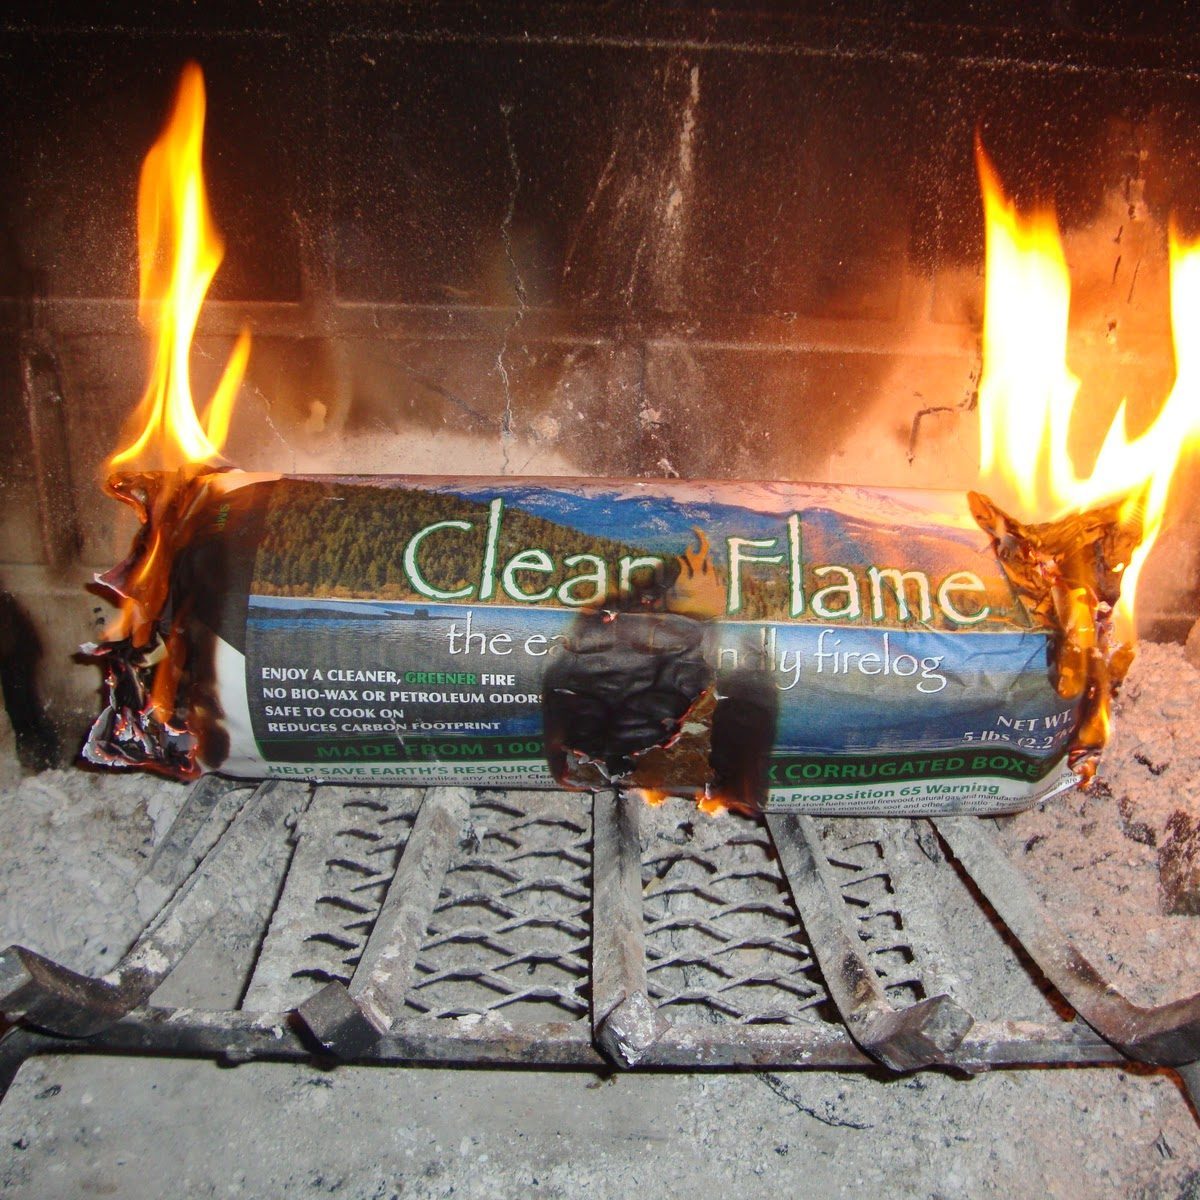 Fireplace fire log